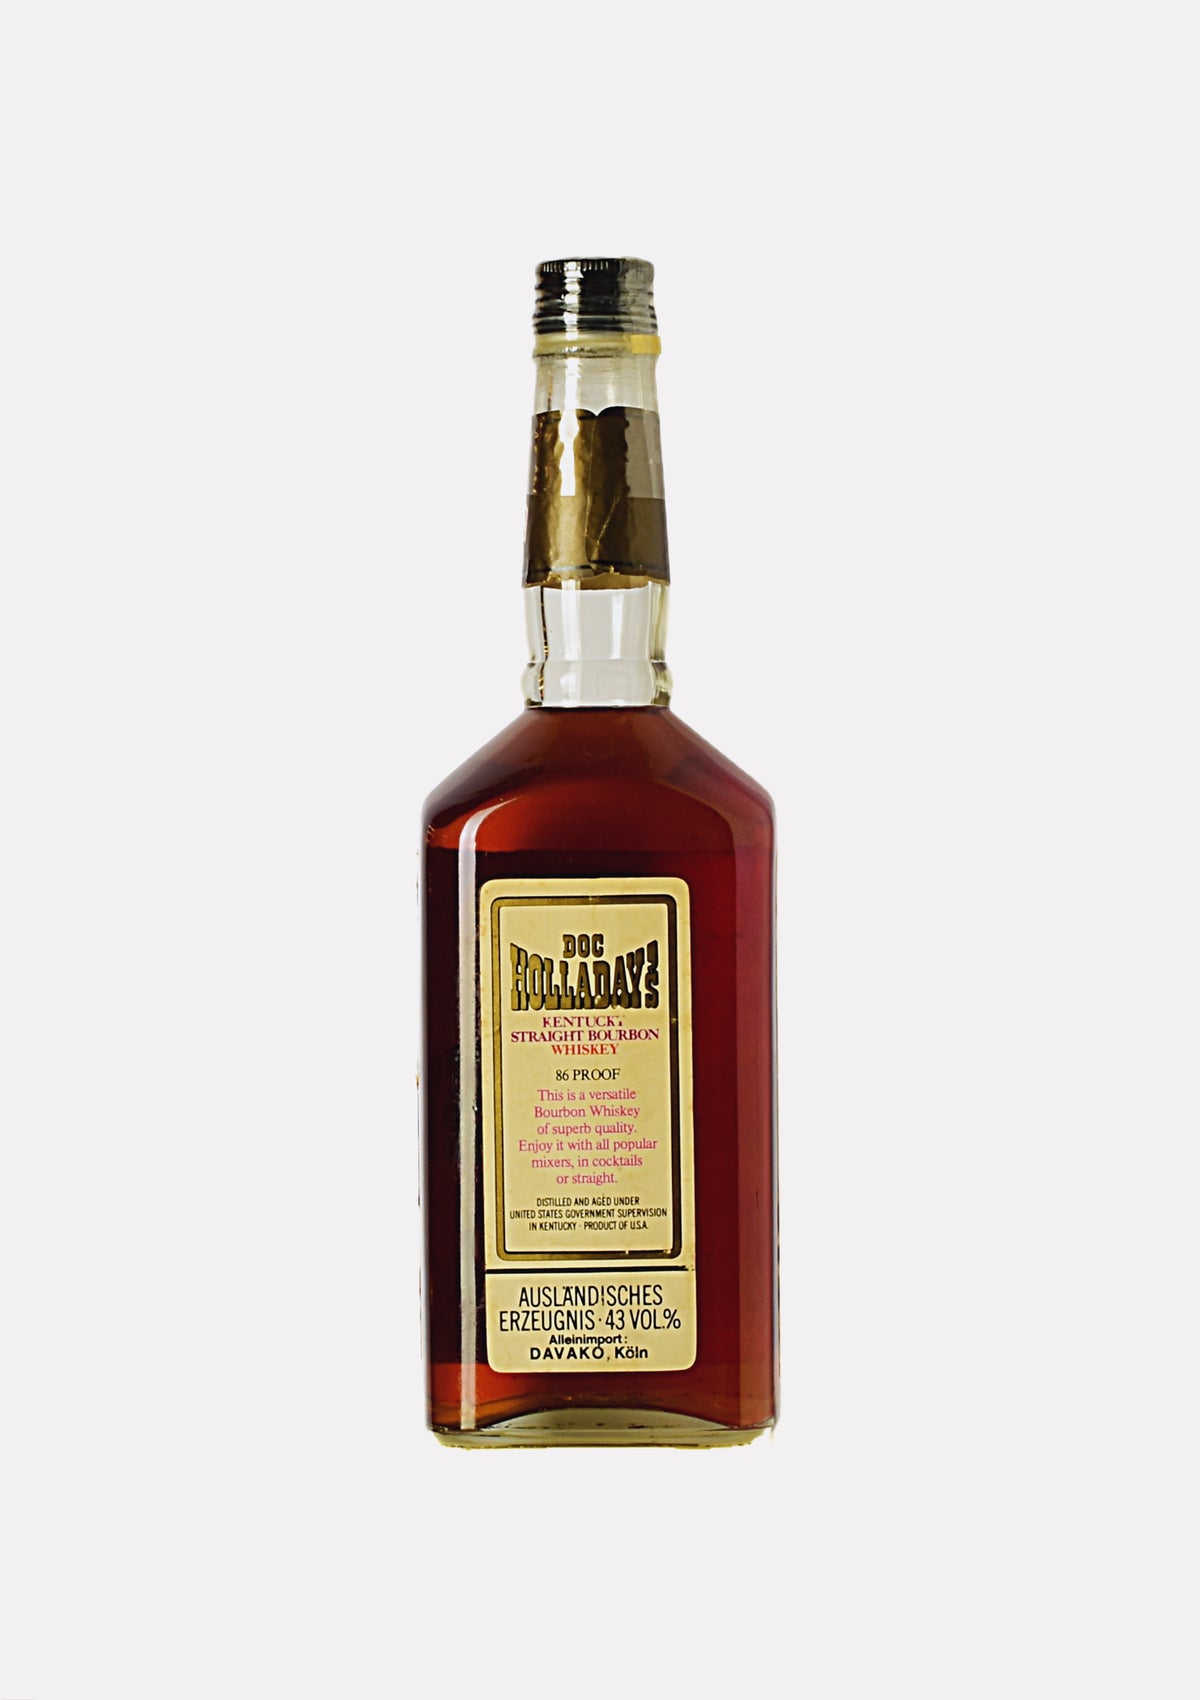 Doc Holladay`s Kentucky Straight Bourbon Whiskey